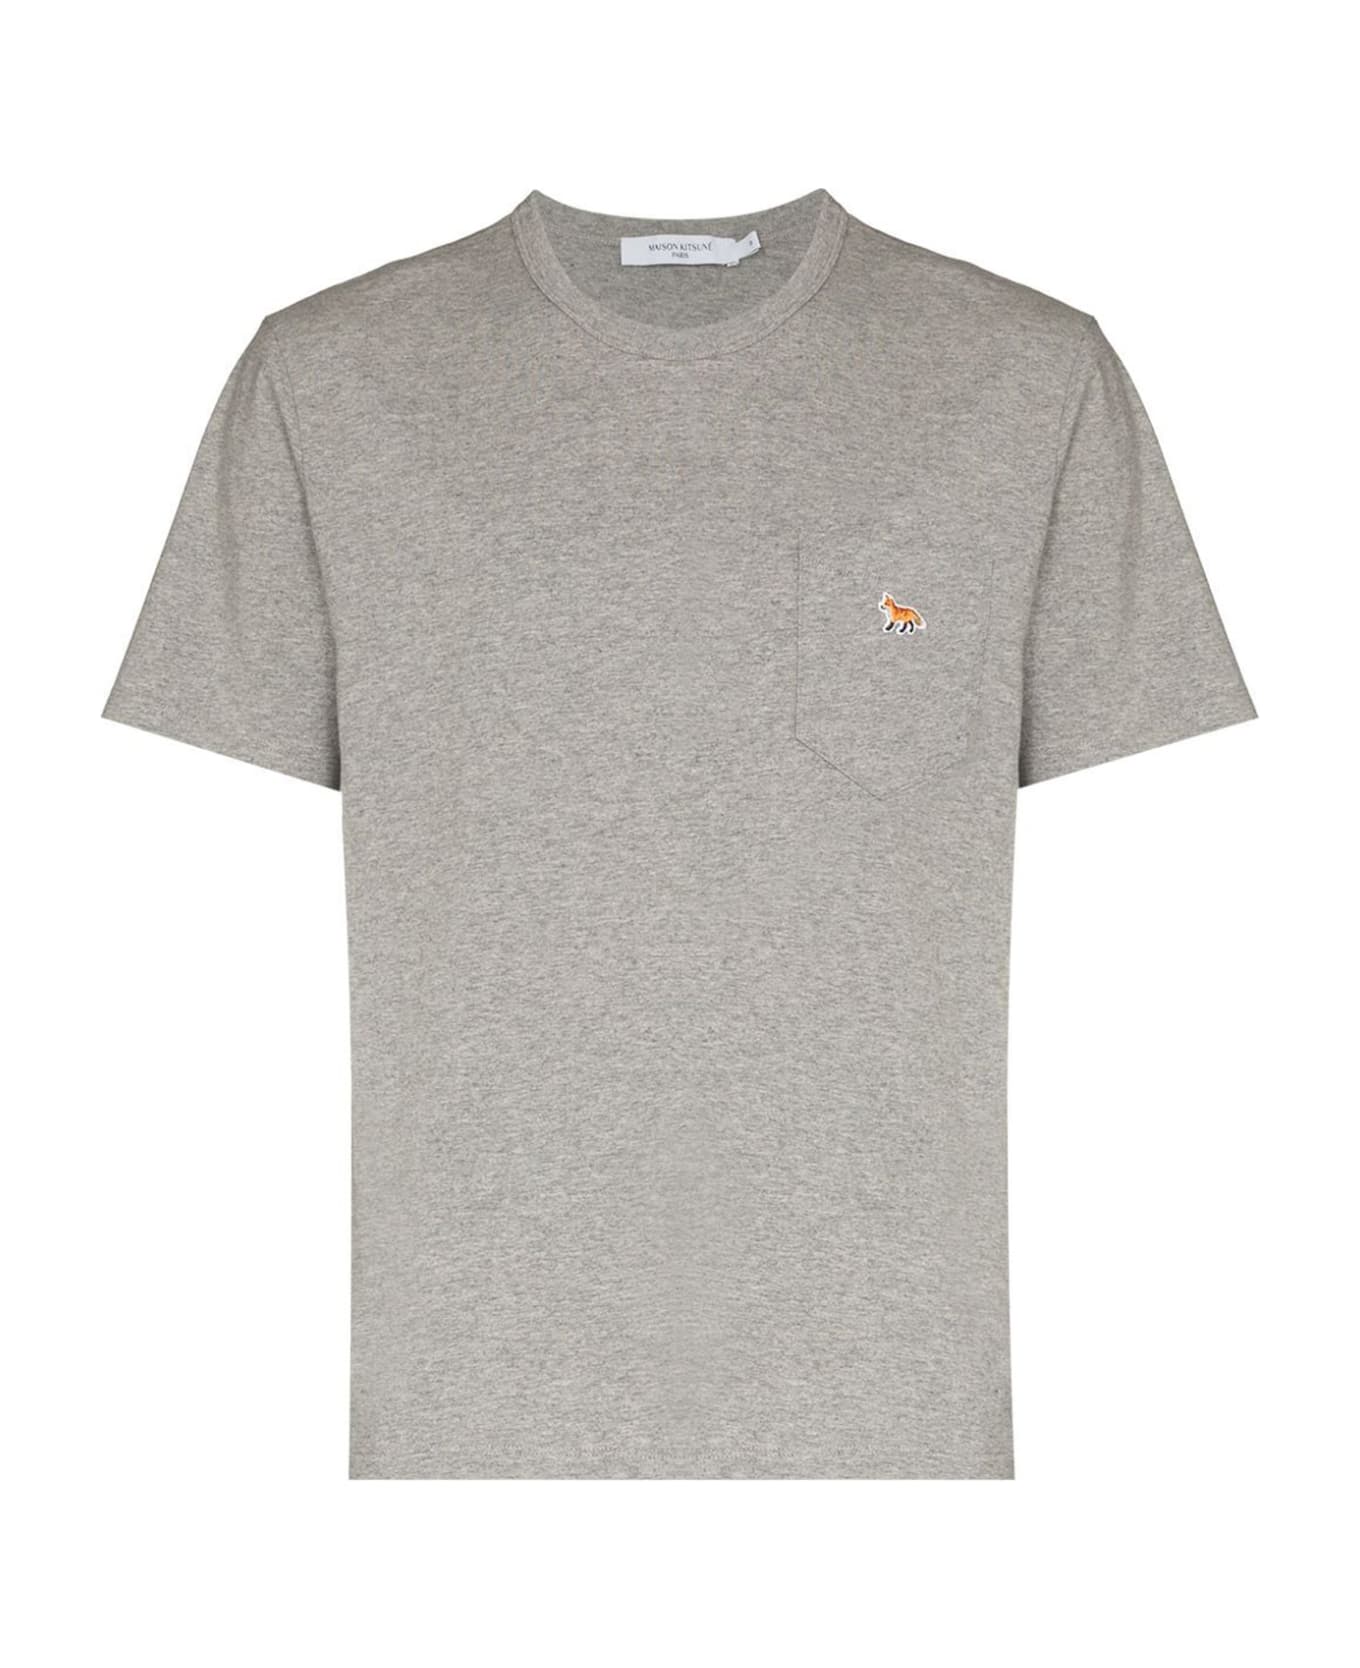 Maison Kitsuné T-Shirt - GREY MELANGE Tシャツ